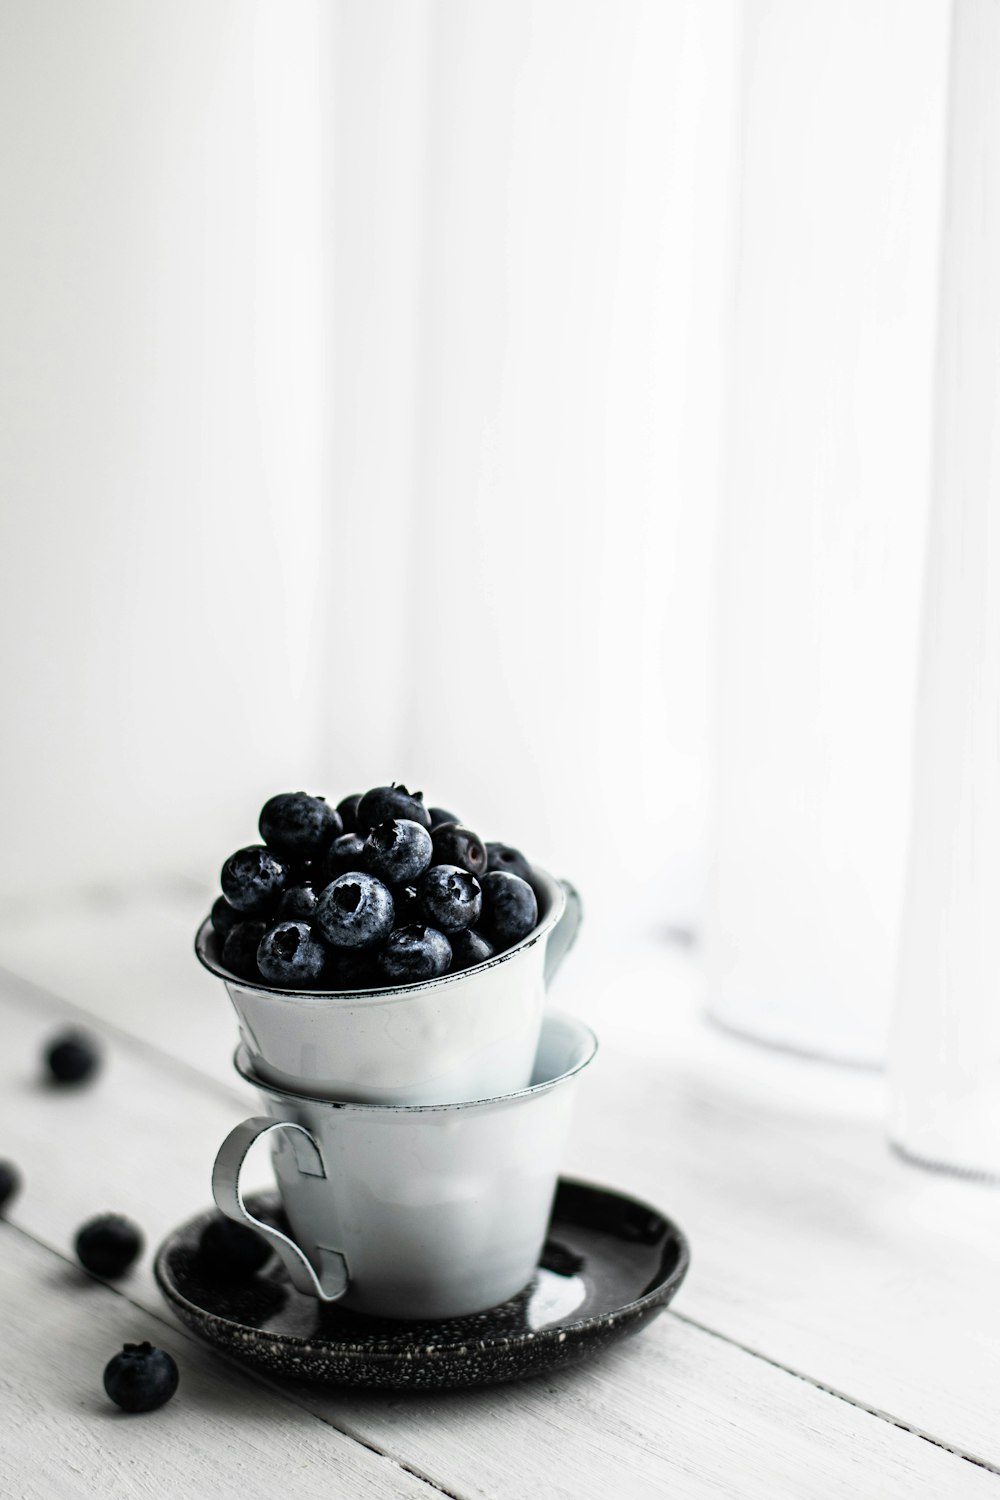 bucket of black berries